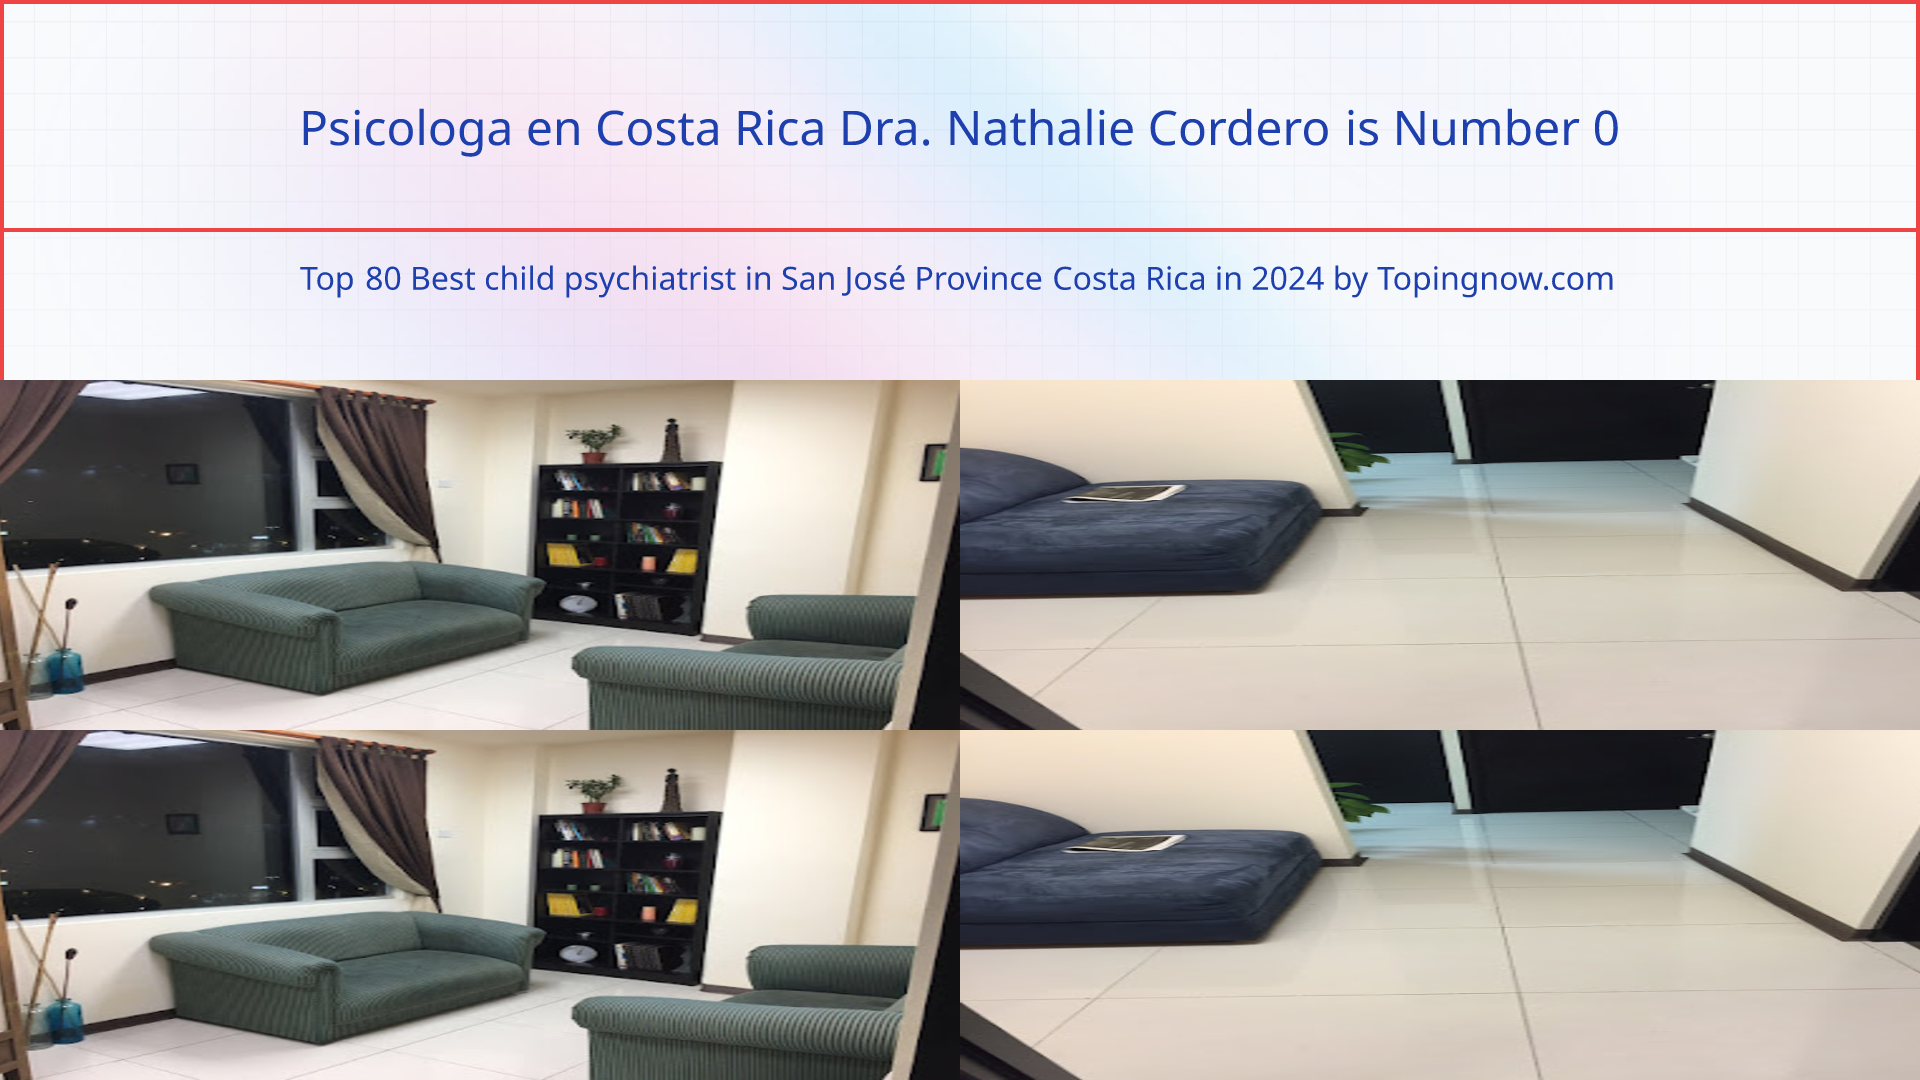 Psicologa en Costa Rica Dra. Nathalie Cordero: Top 80 Best child psychiatrist in San José Province Costa Rica in 2024